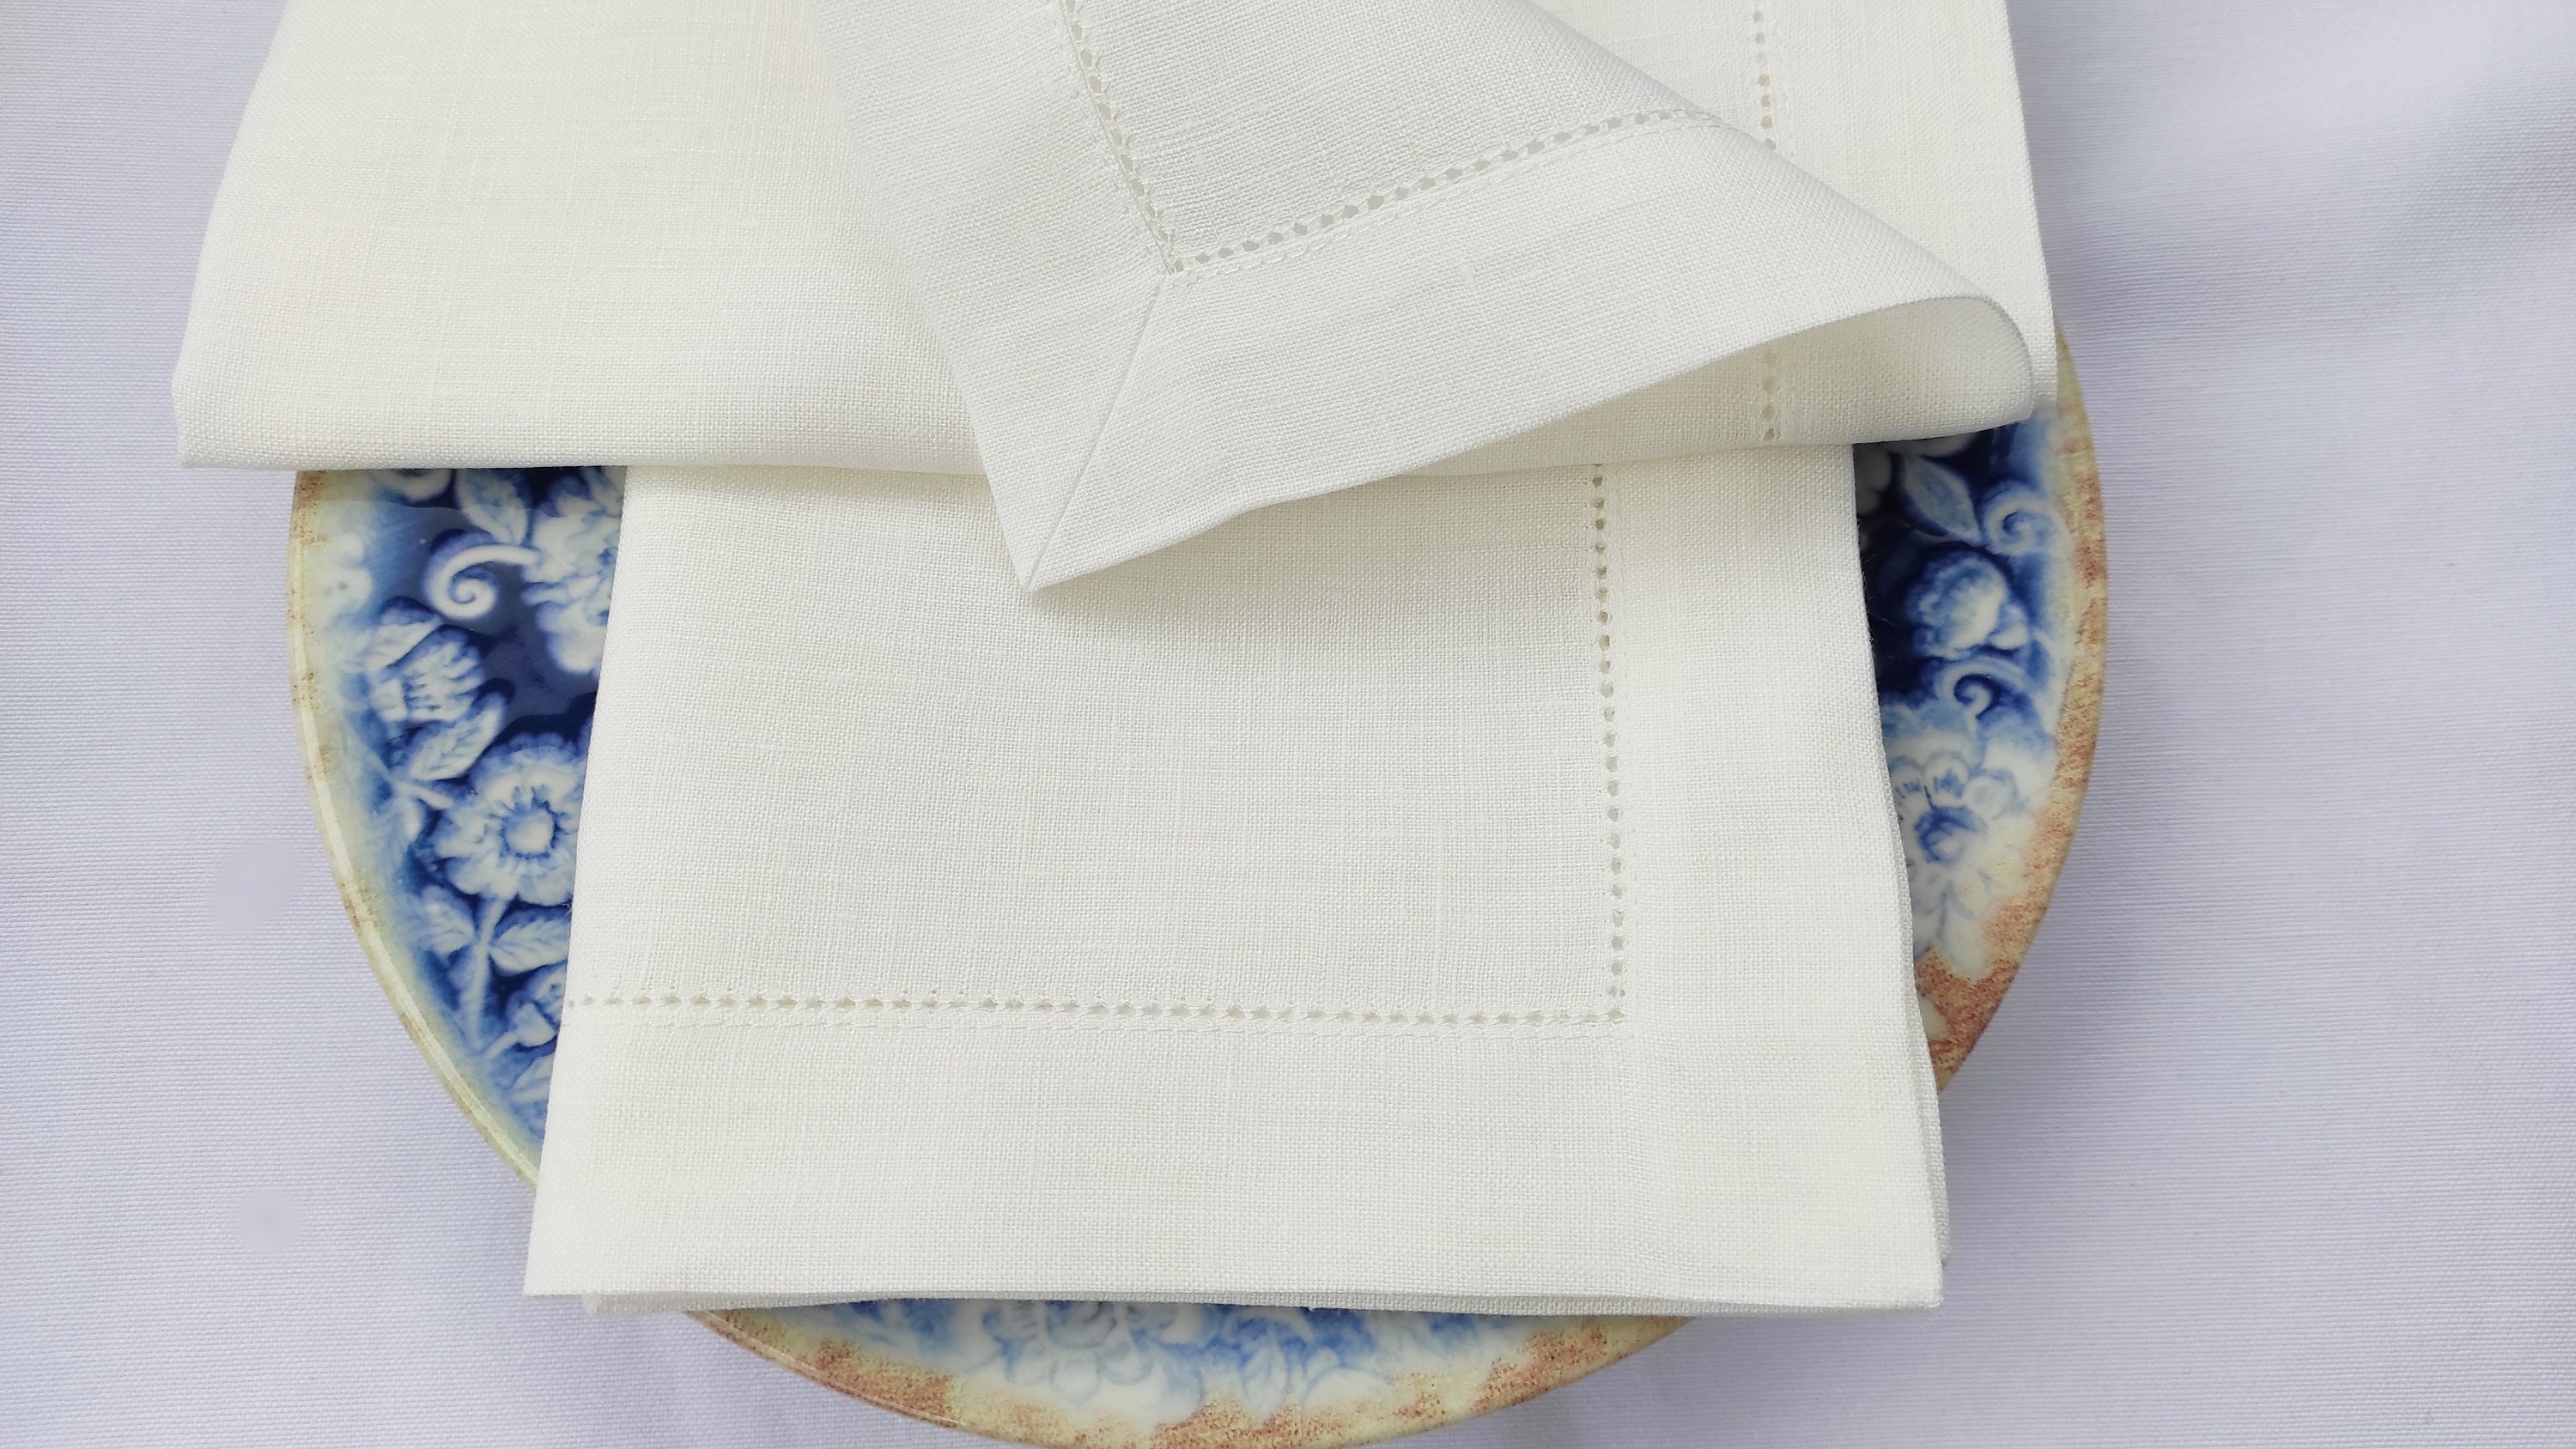 White Linen Hem Stitch Dinner Napkins - Set of 12 20x20-Ladder Hem Stitch  100% Linen Cloth Napkins-Super Value Bulk 12 Pack